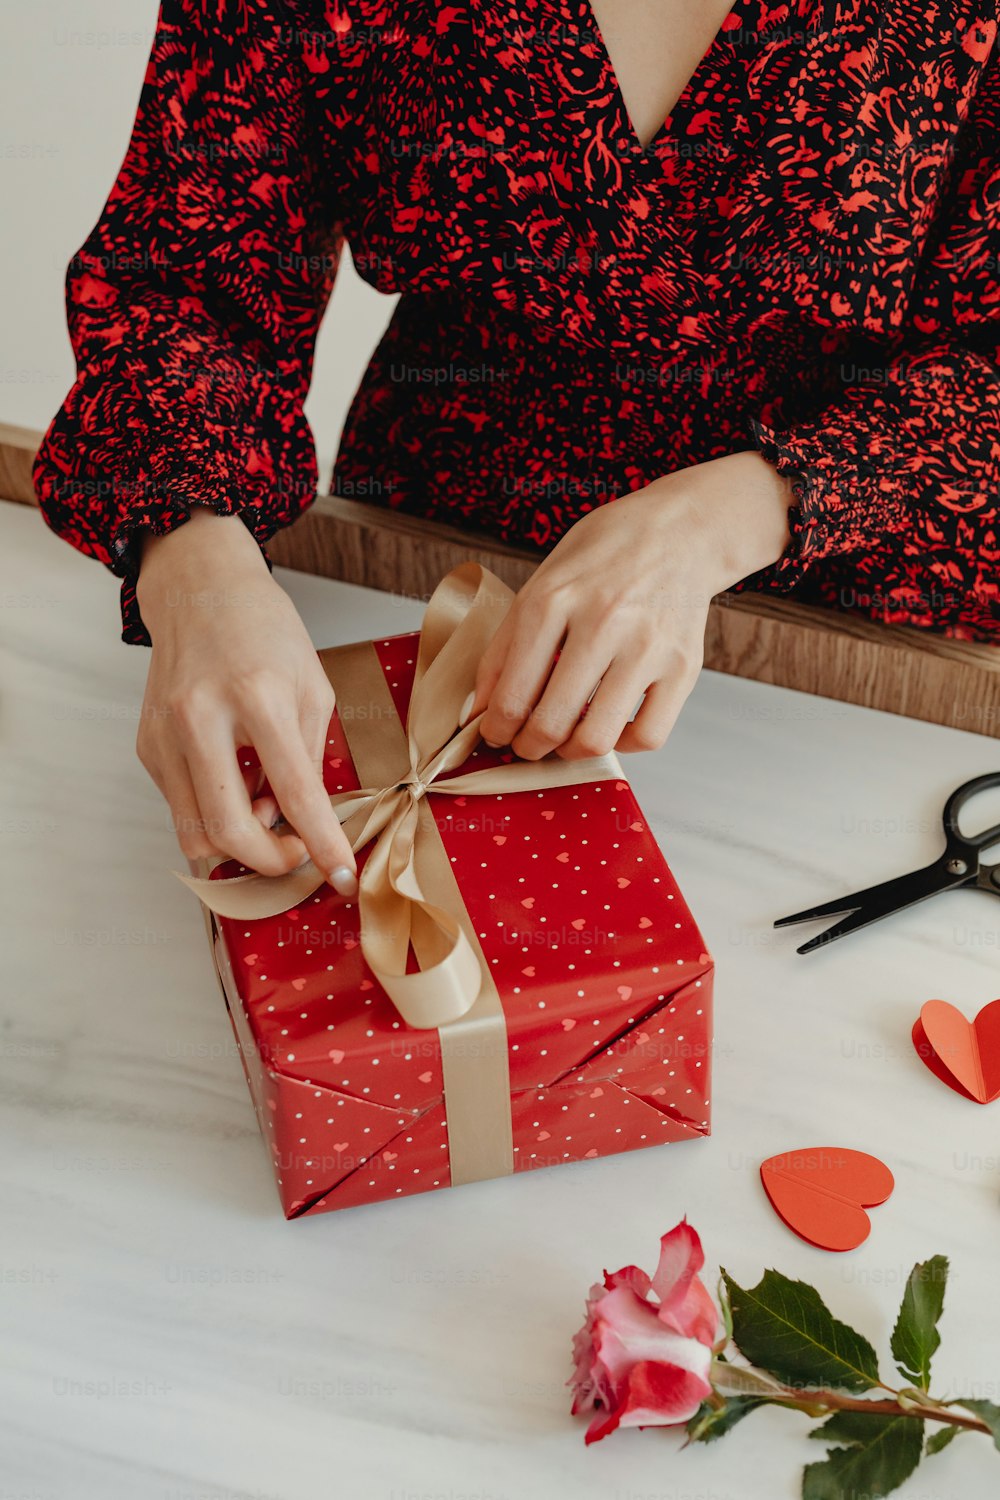 Une femme emballe un cadeau avec un ruban brun